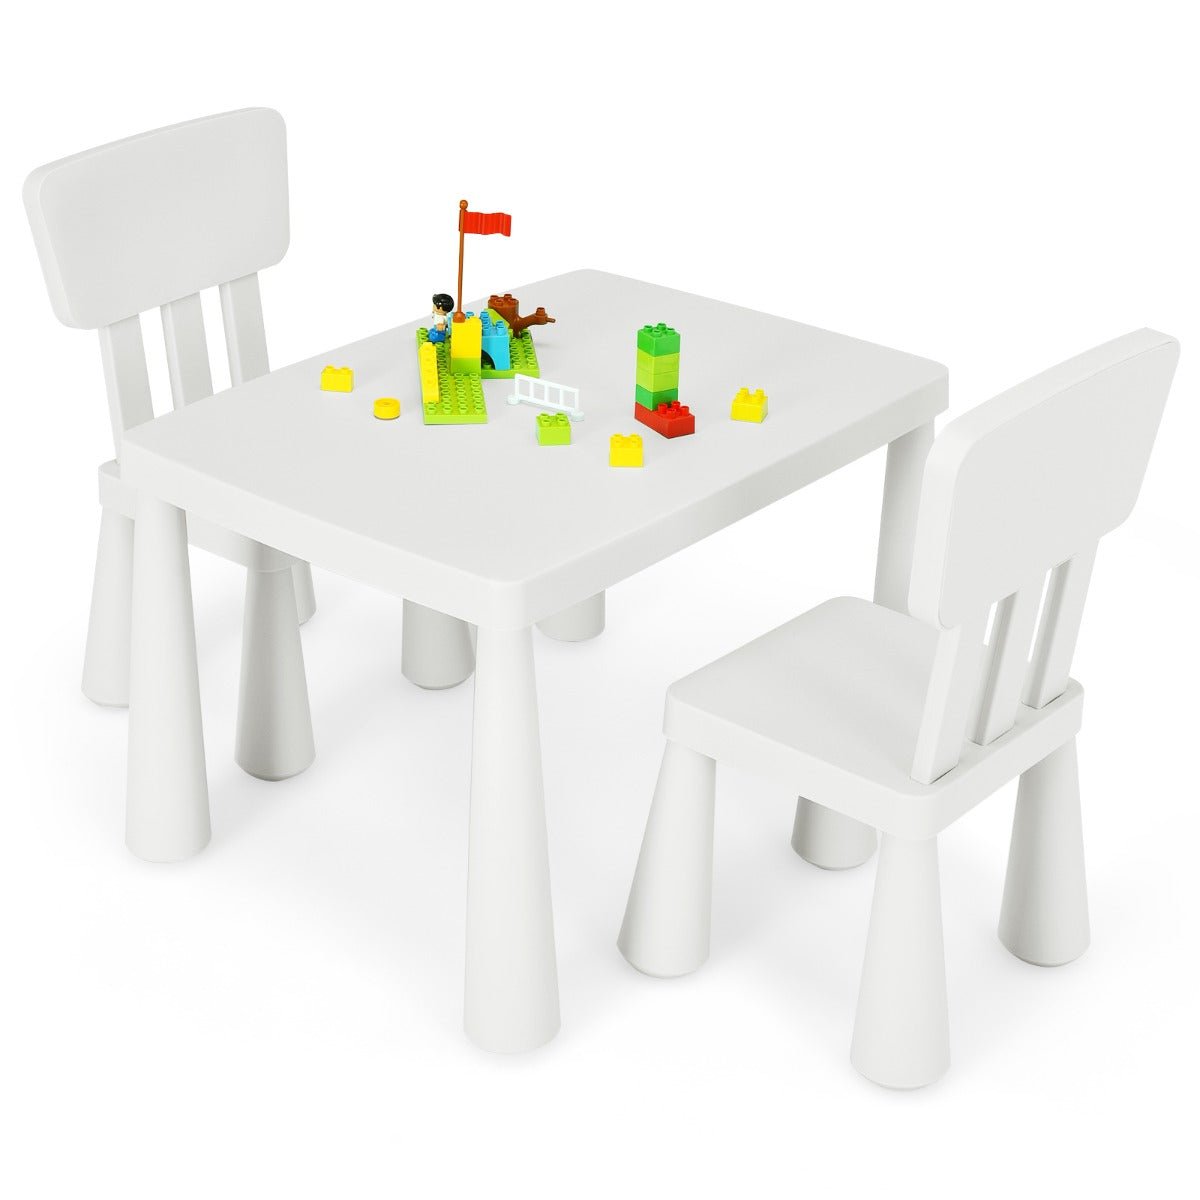 3-Piece Kids White Table Set for Reading - Spark Imagination